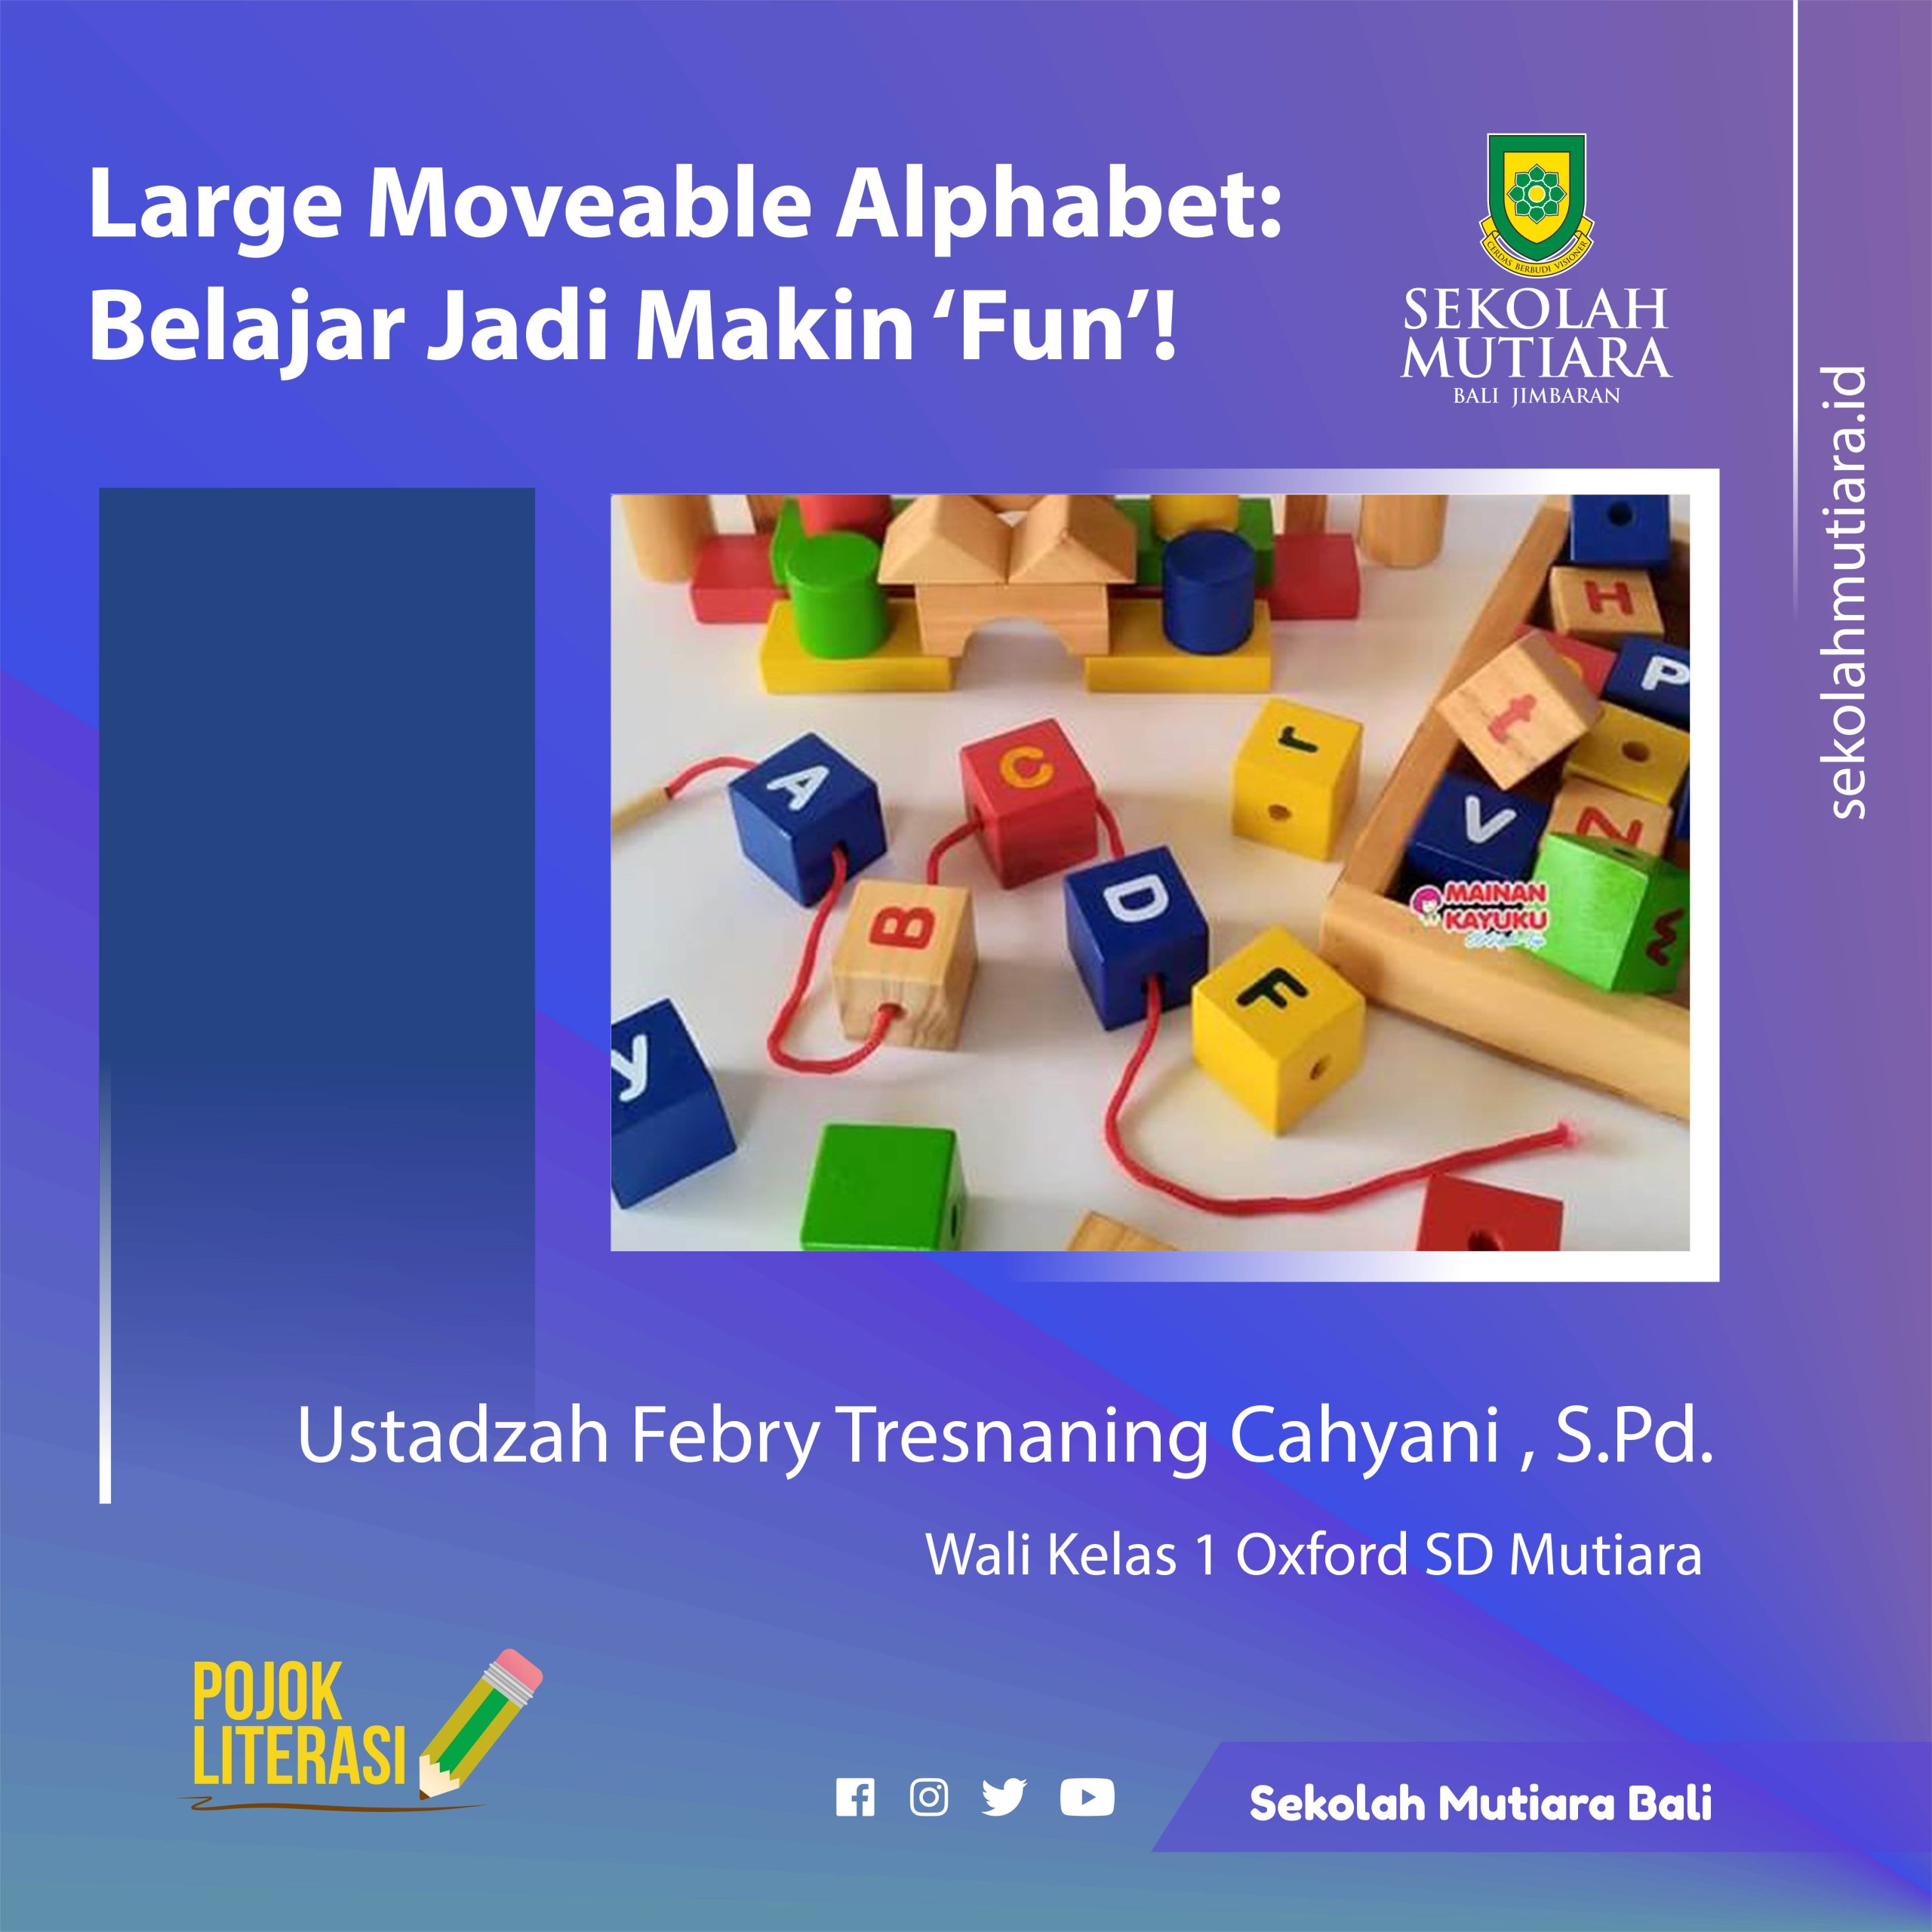 Large Moveable Alphabet: Belajar Jadi Makin ‘Fun’!